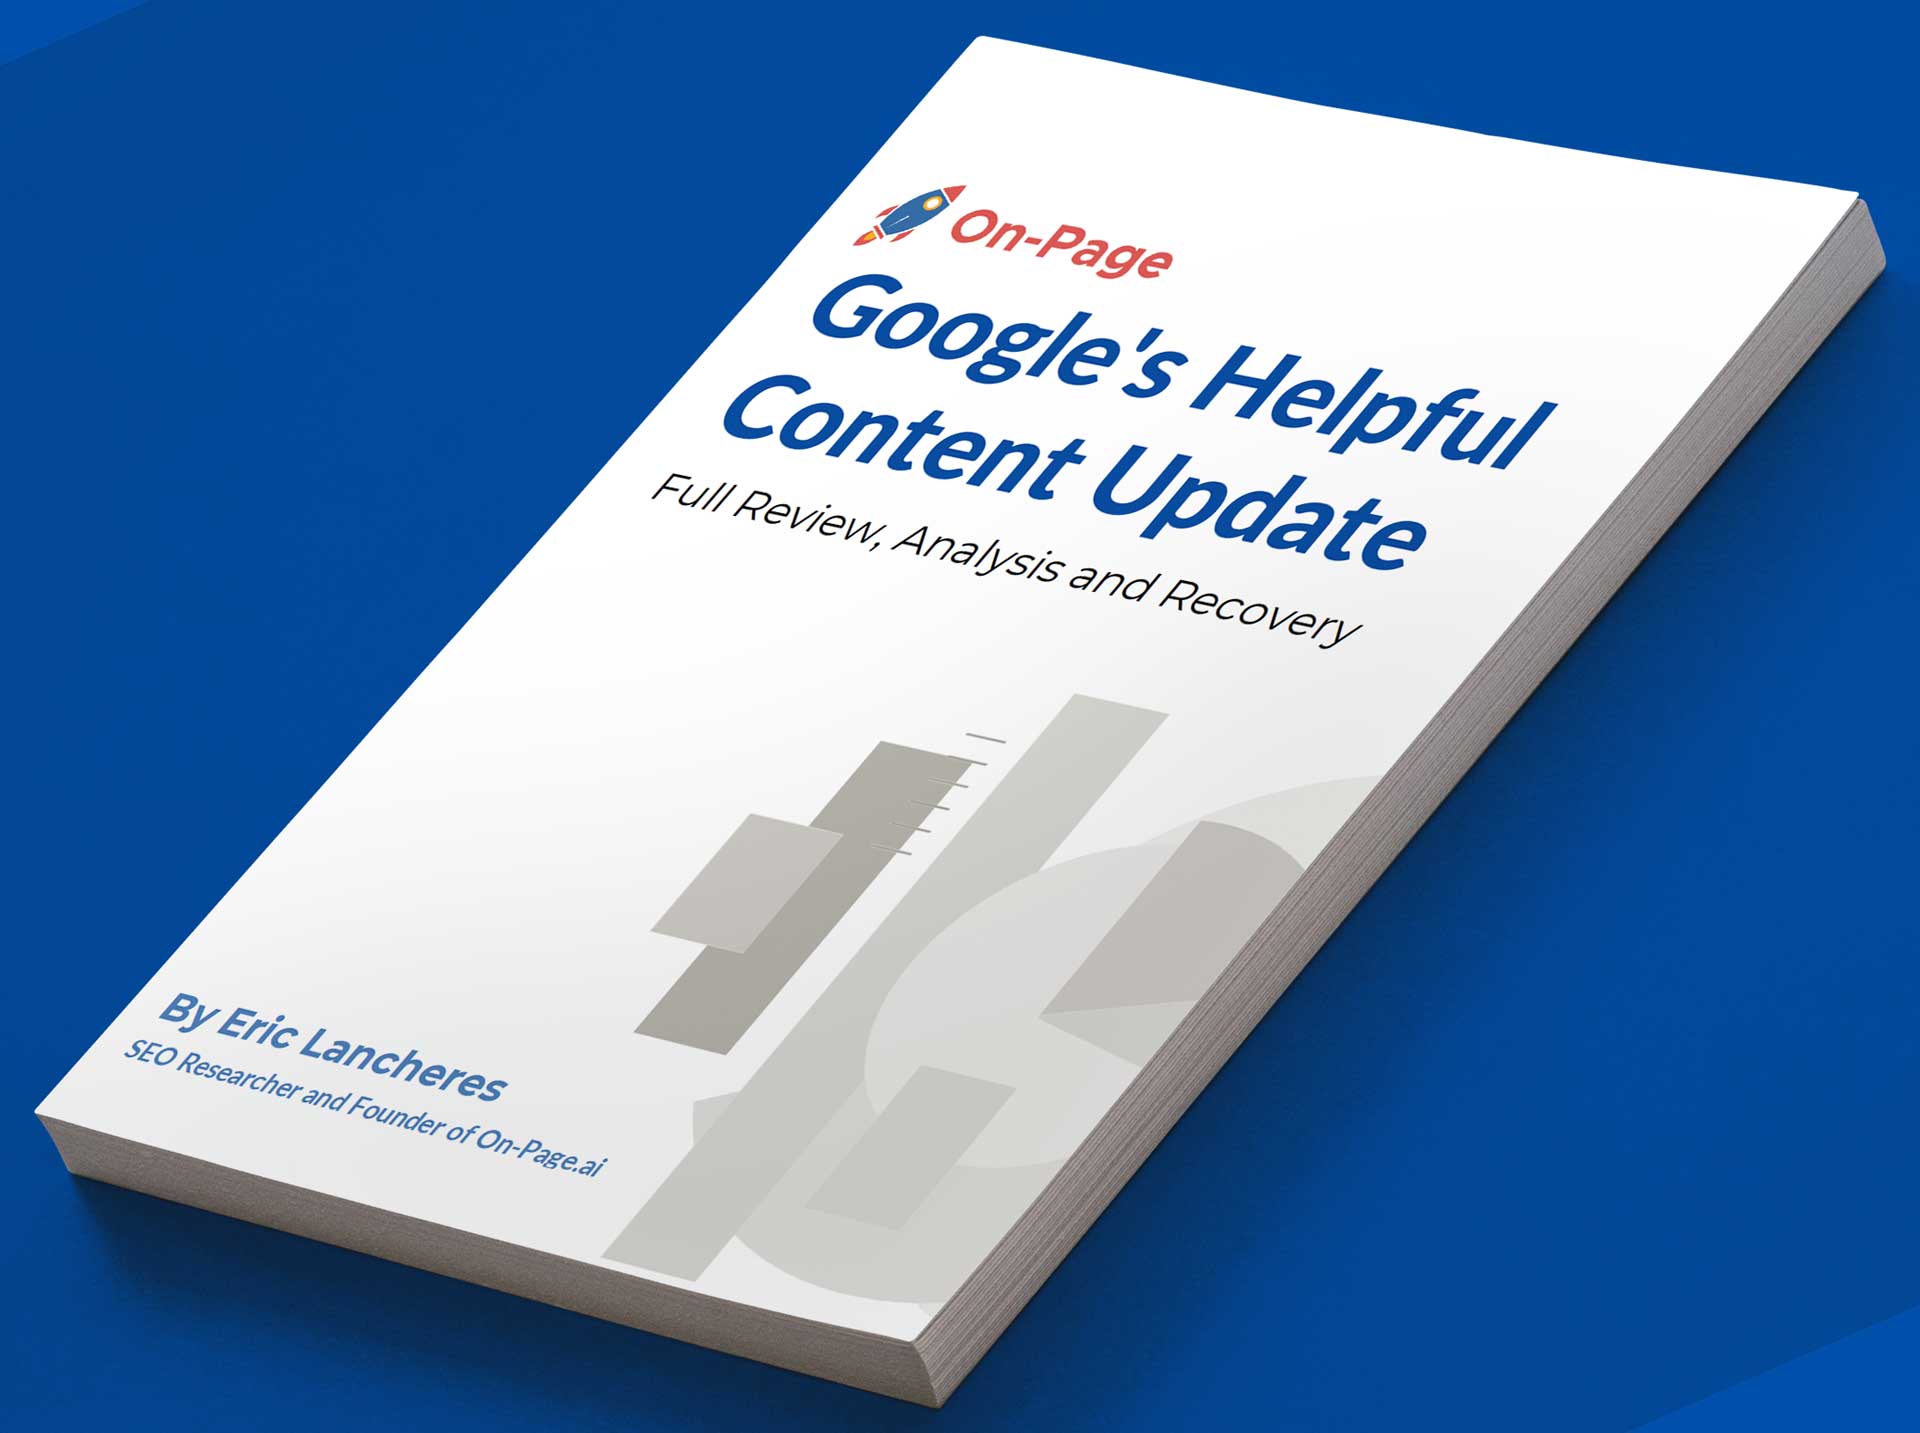 Deciphering Google’s Latest "Helpful Content Update": SEO Expert Eric Lancheres Drops Comprehensive, Free-Access Report